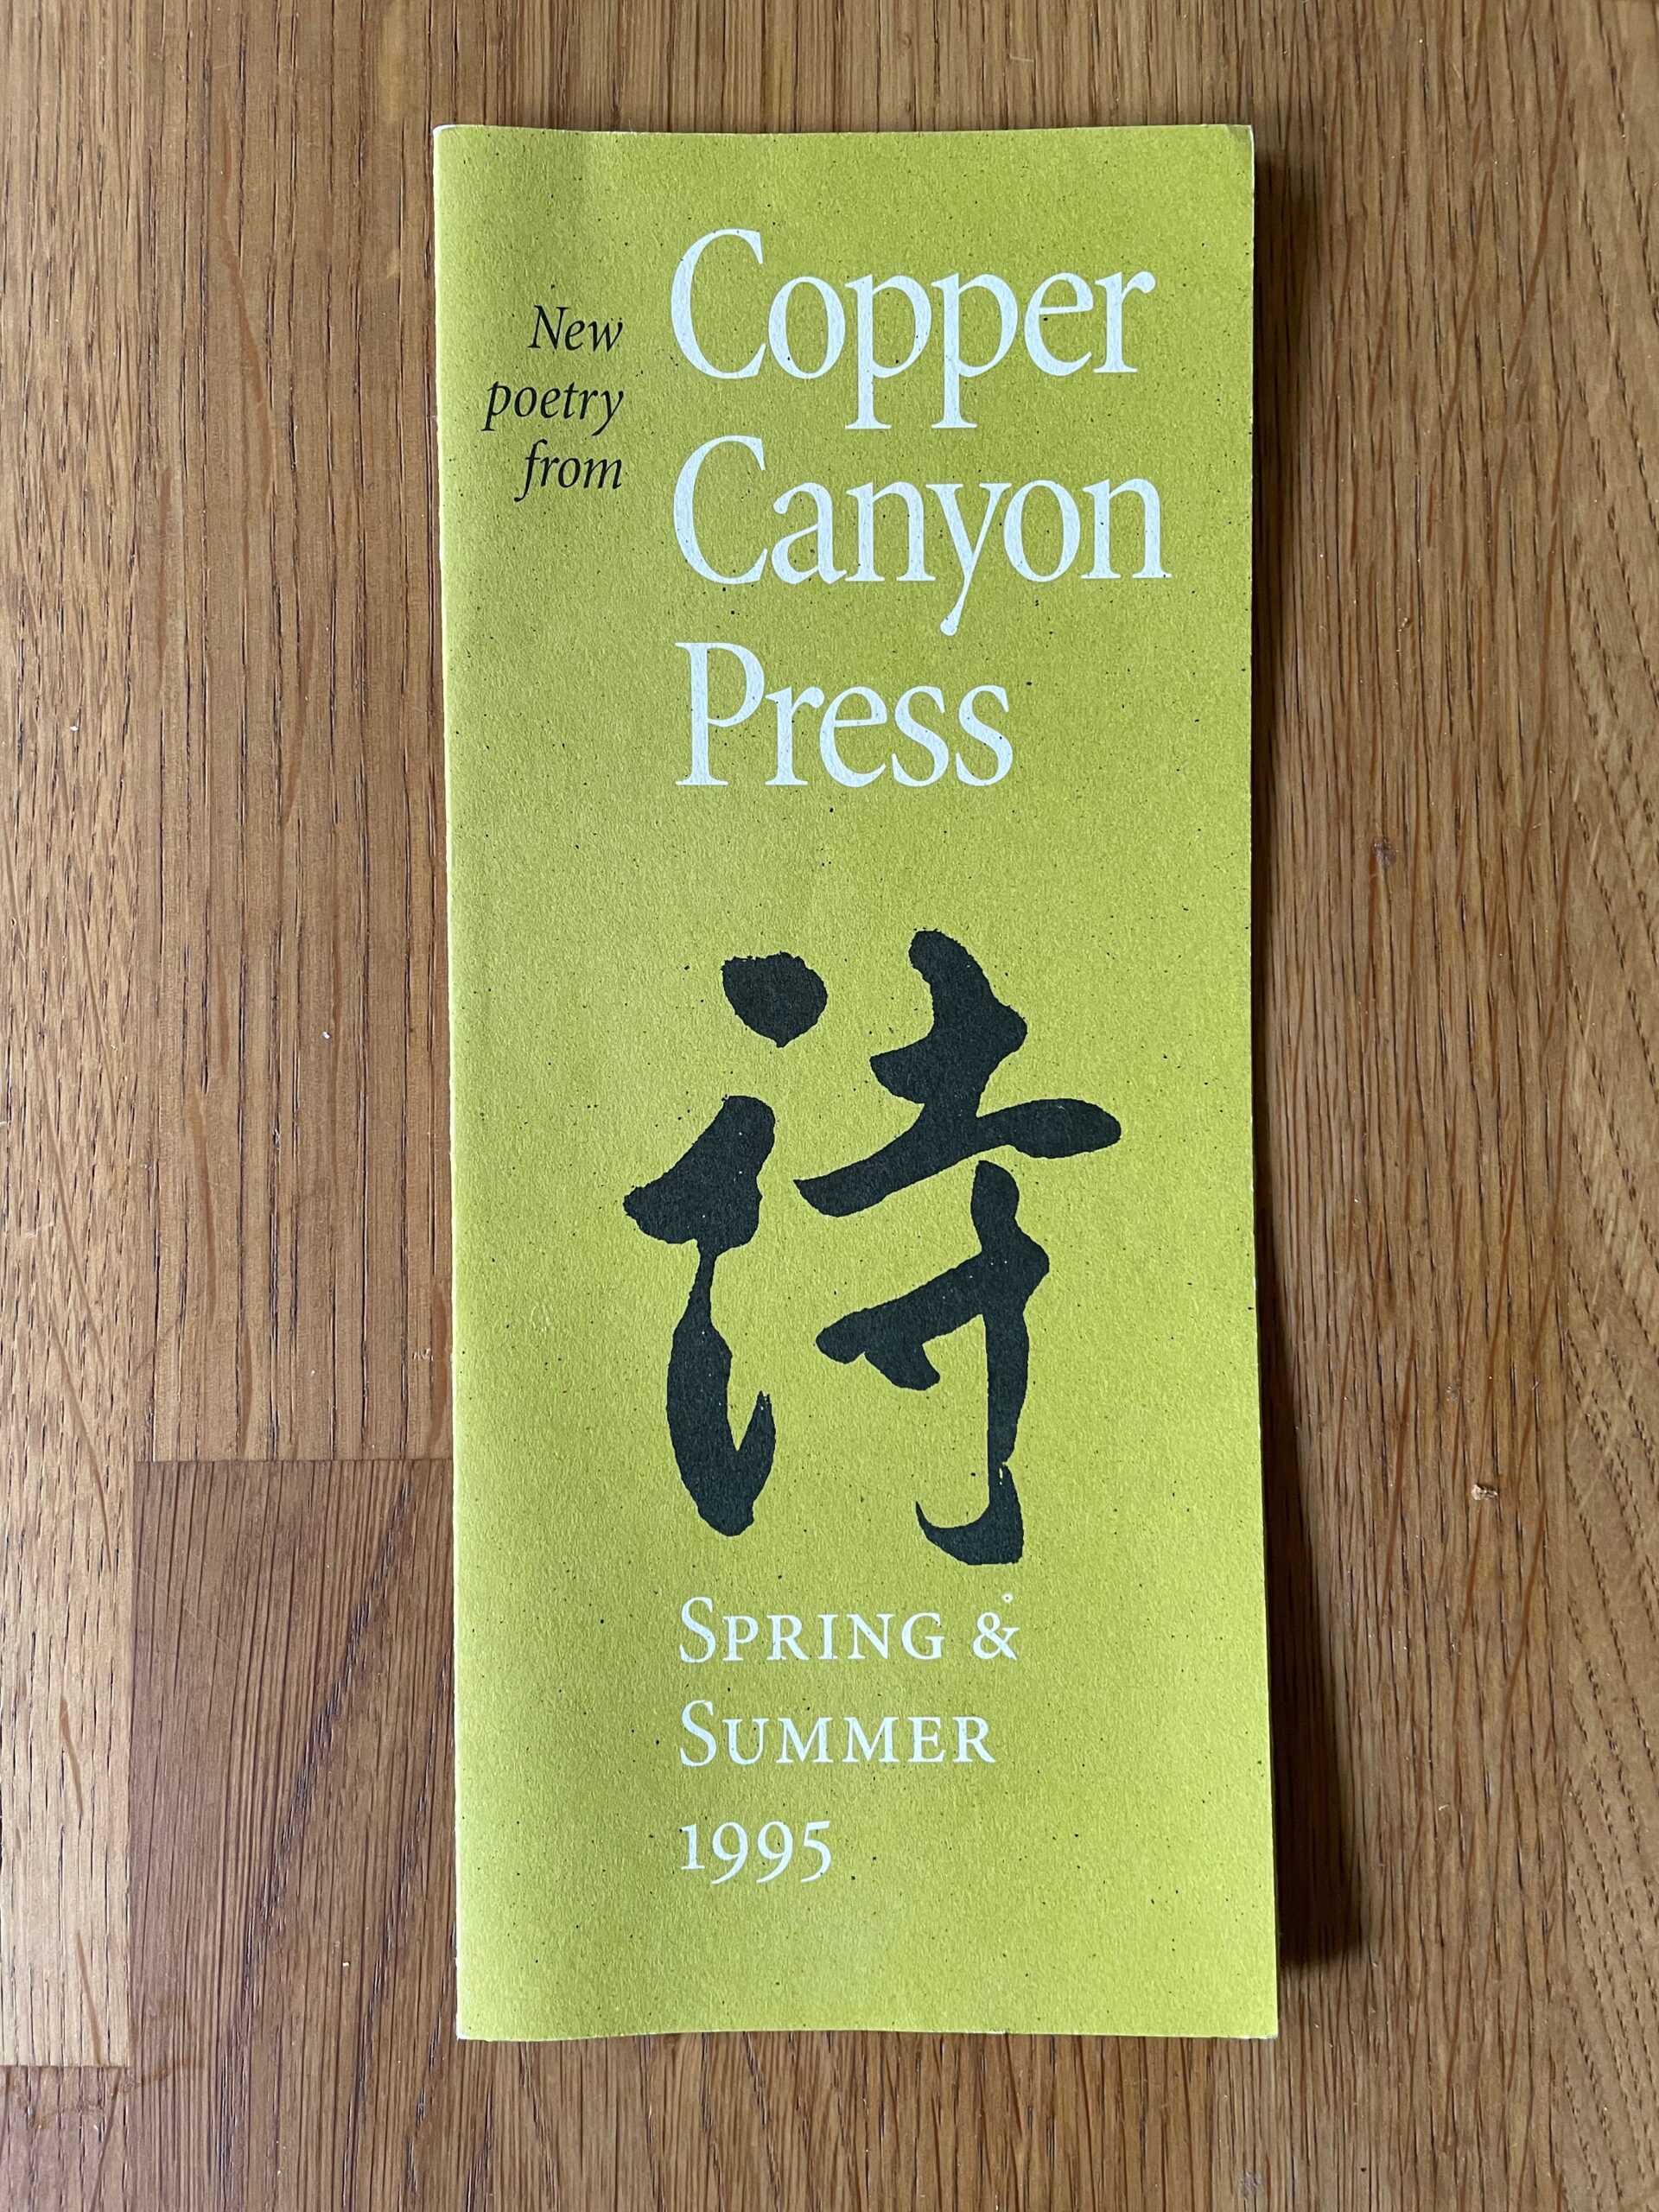 Copper Canyon Press brochure, Spring & Summer 1995